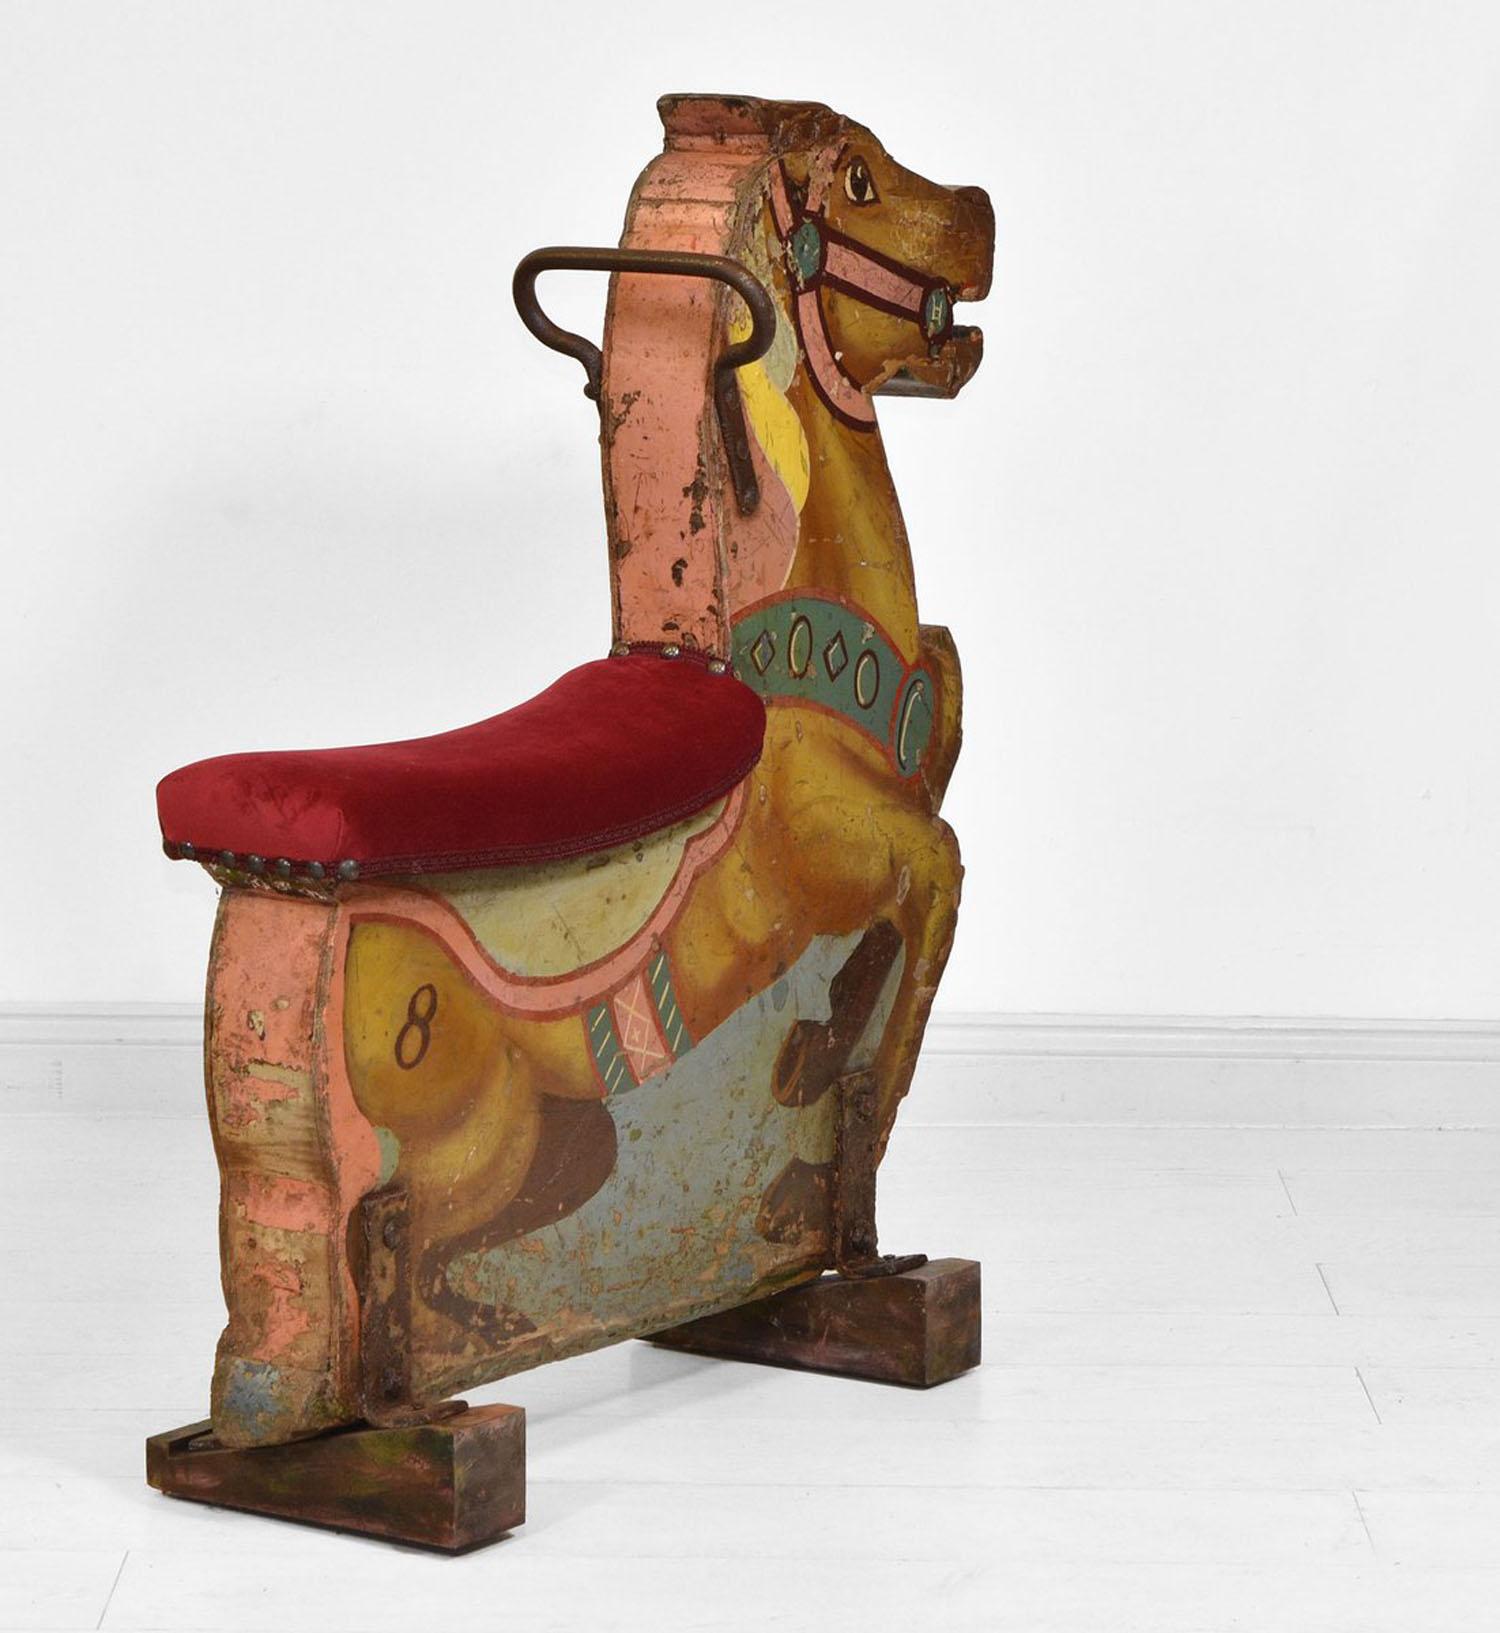 English Fairground Merry Go Round Carousel Ride Wooden Decorative Horse Velvet Seat